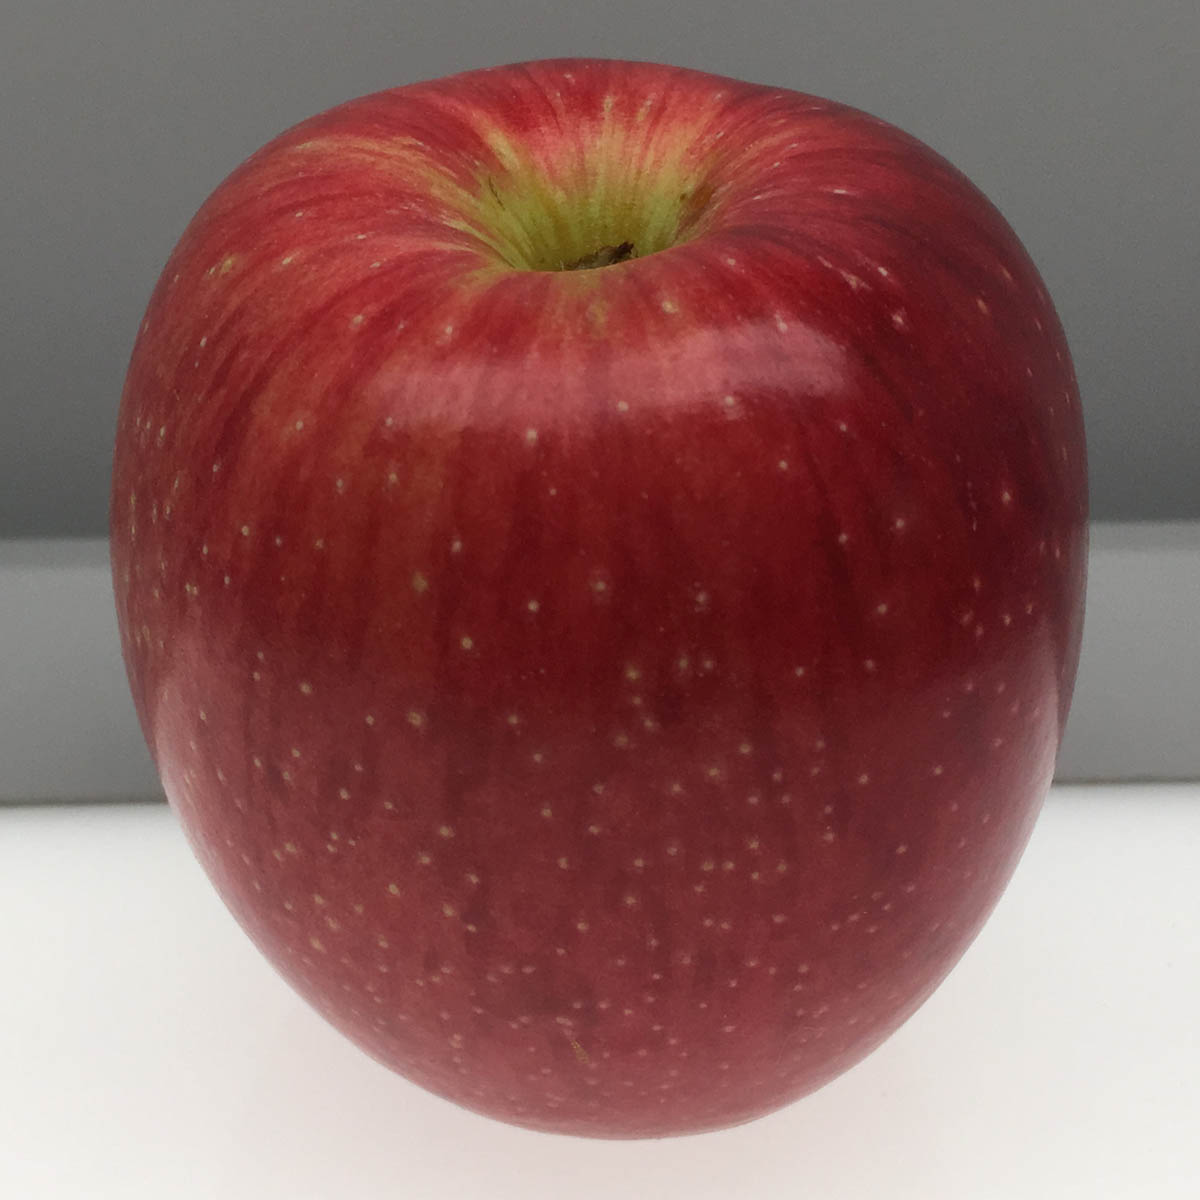 Ramsdell Sweet apple